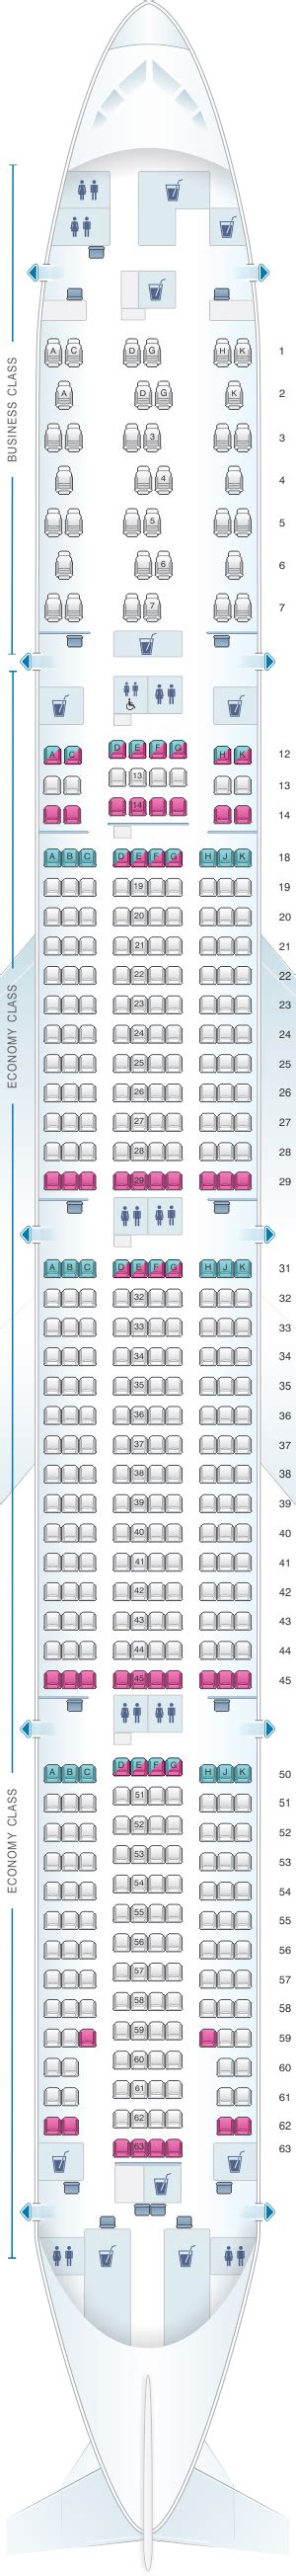 Air Canada Seat Map Lr Elcho Table